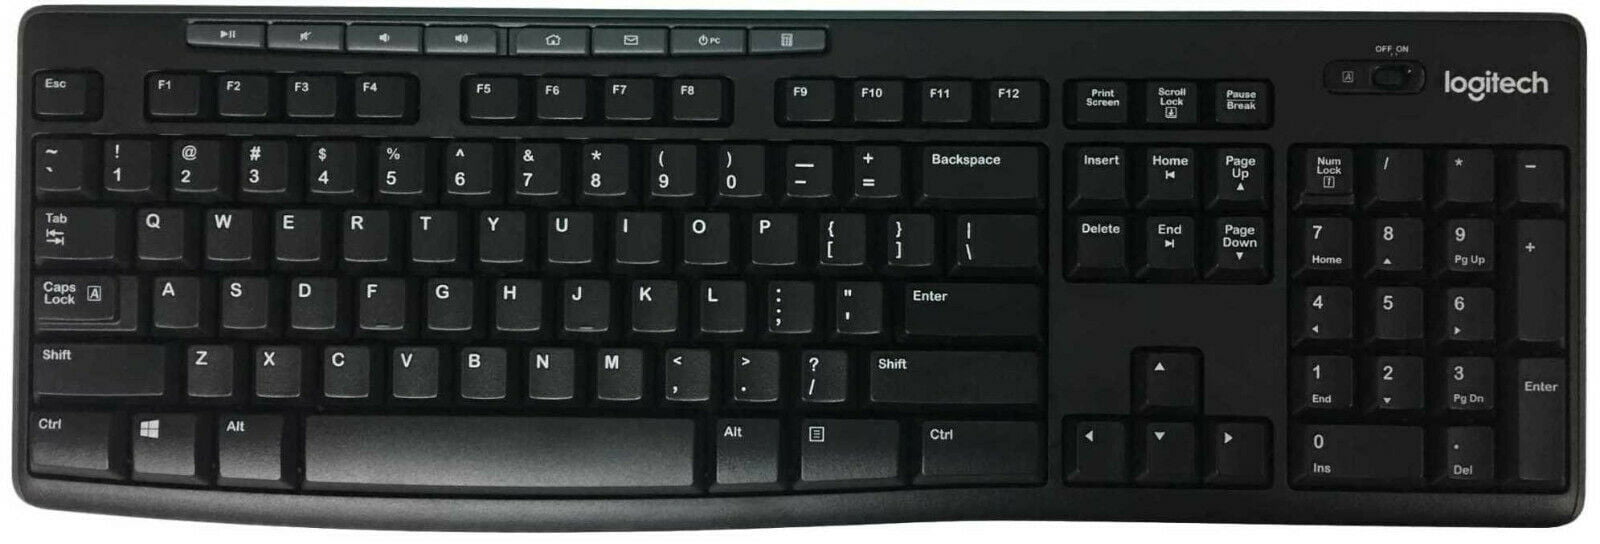 Logitech MK270 Wireless Combo K270 Full Size Keyboard & M185 PC Compact Mouse USB 2.4Ghz Wireless Receiver - 920-008971 - Black - Ships in Brown Box - Walmart.com